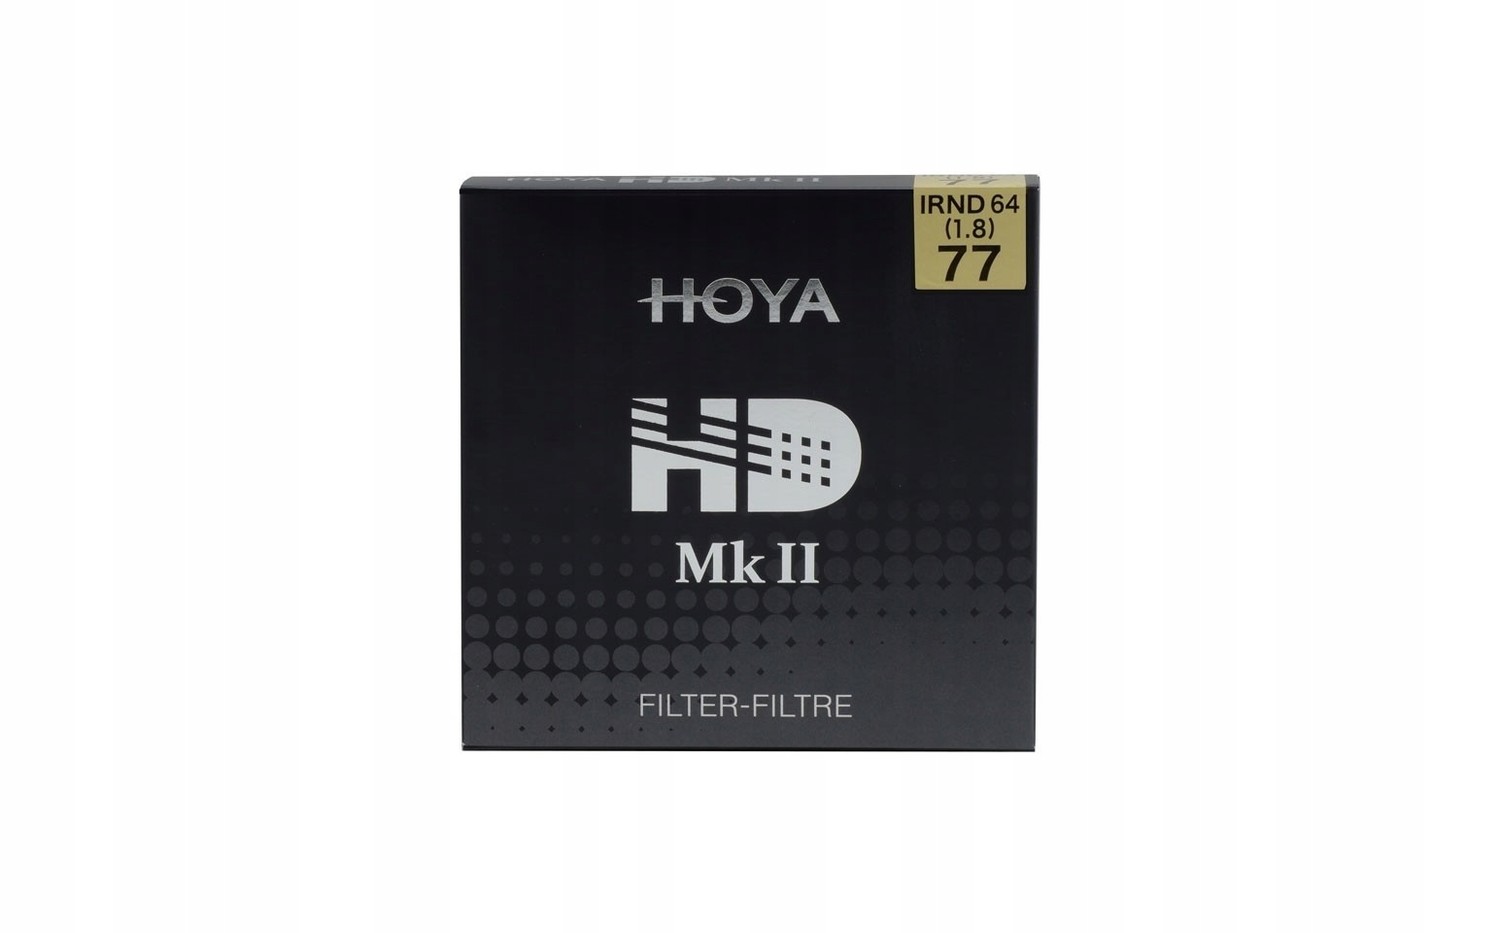 Filtr Hoya Hd MkII IRND64 (1.8) 62mm